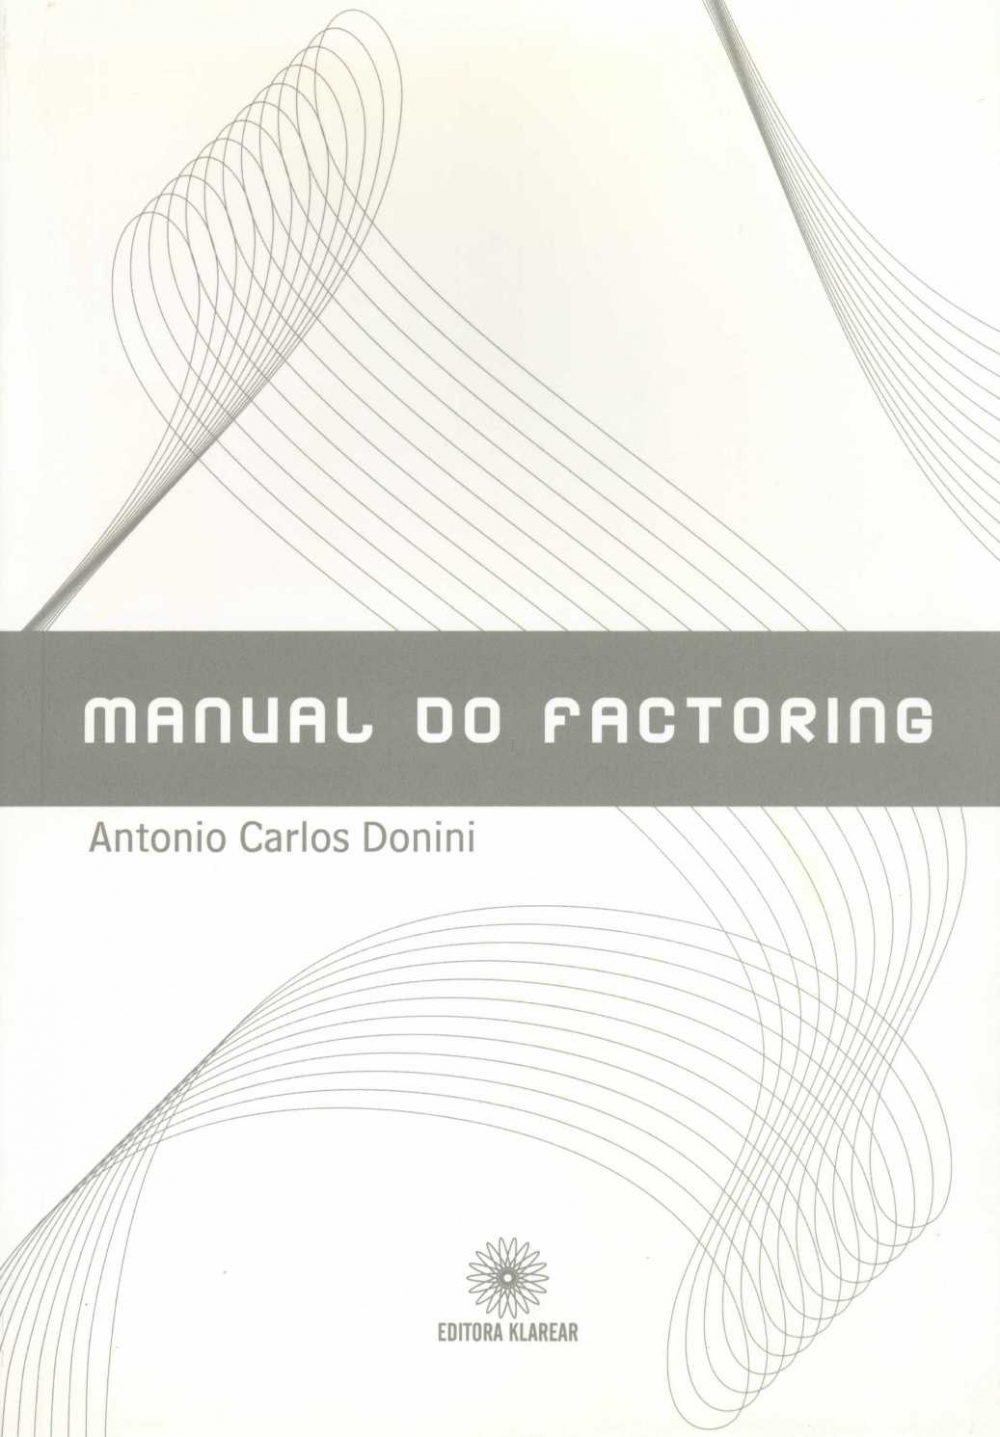 Manual do factoring